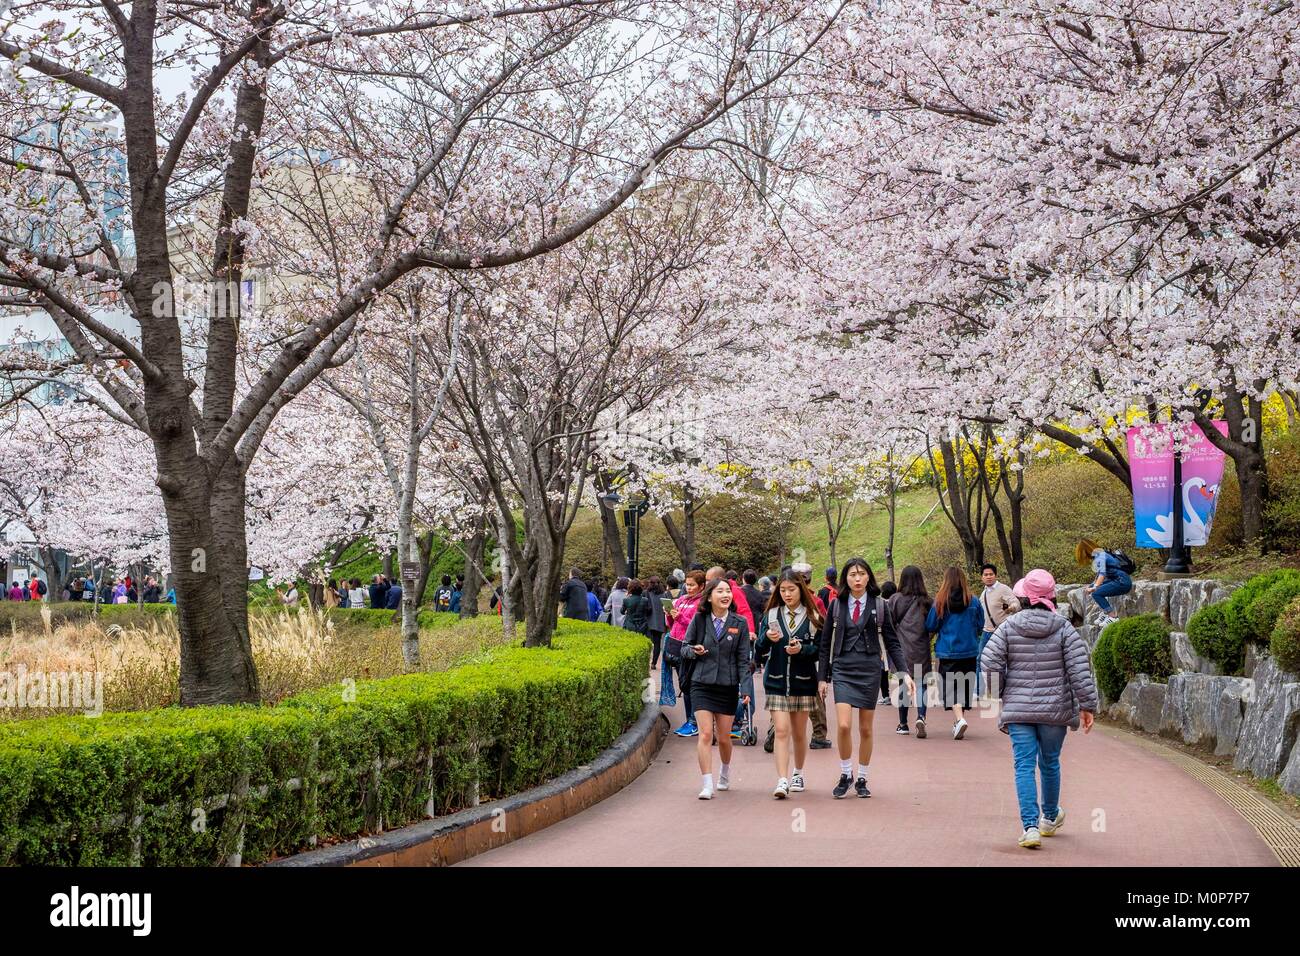 South Korea,Seoul,Songpa-gu district,cherry blossoms in the Songpa Naru Park Stock Photo